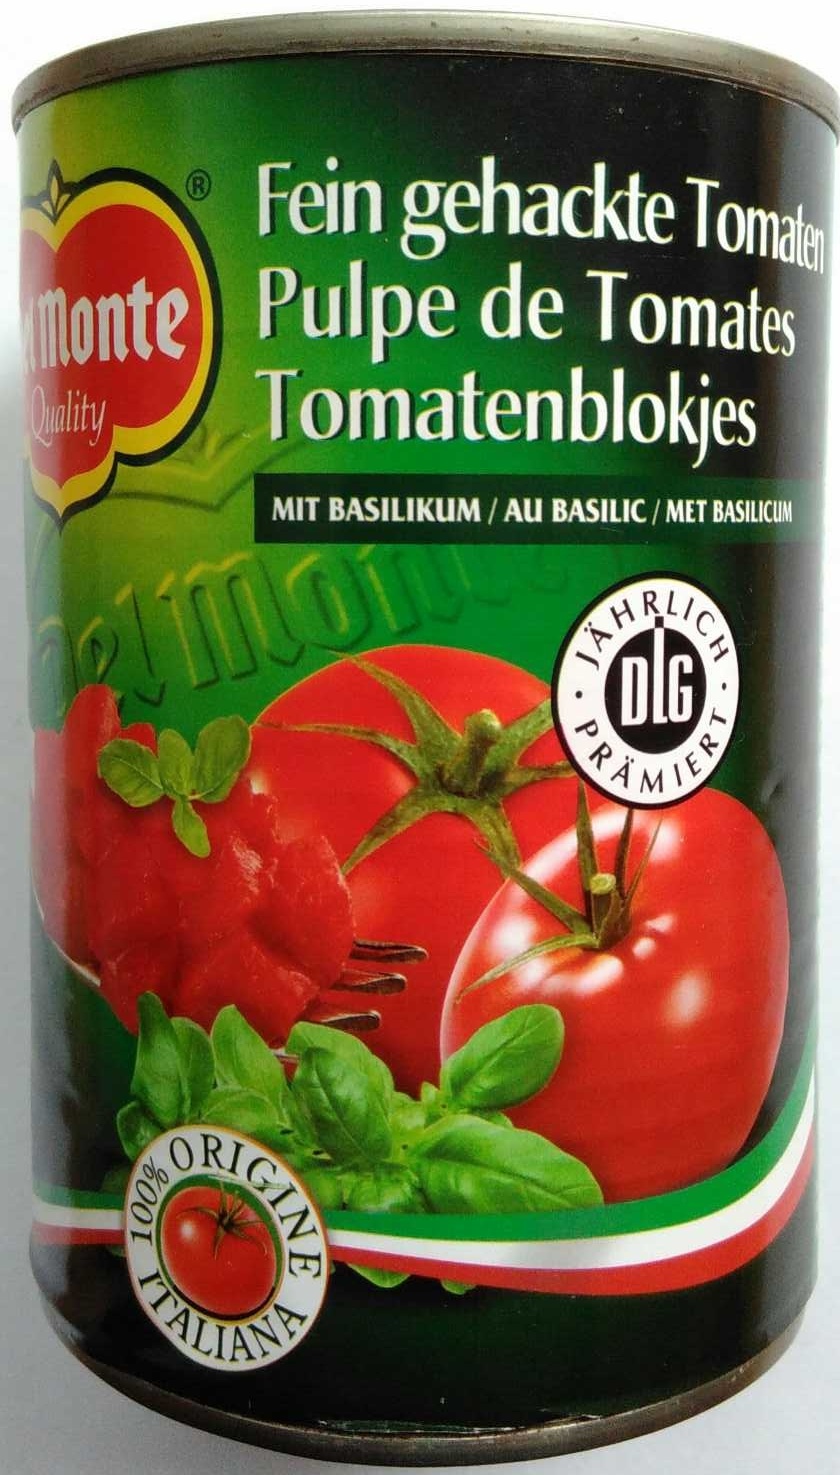 Fein gehackte Tomaten mit Basilikum - Product - de